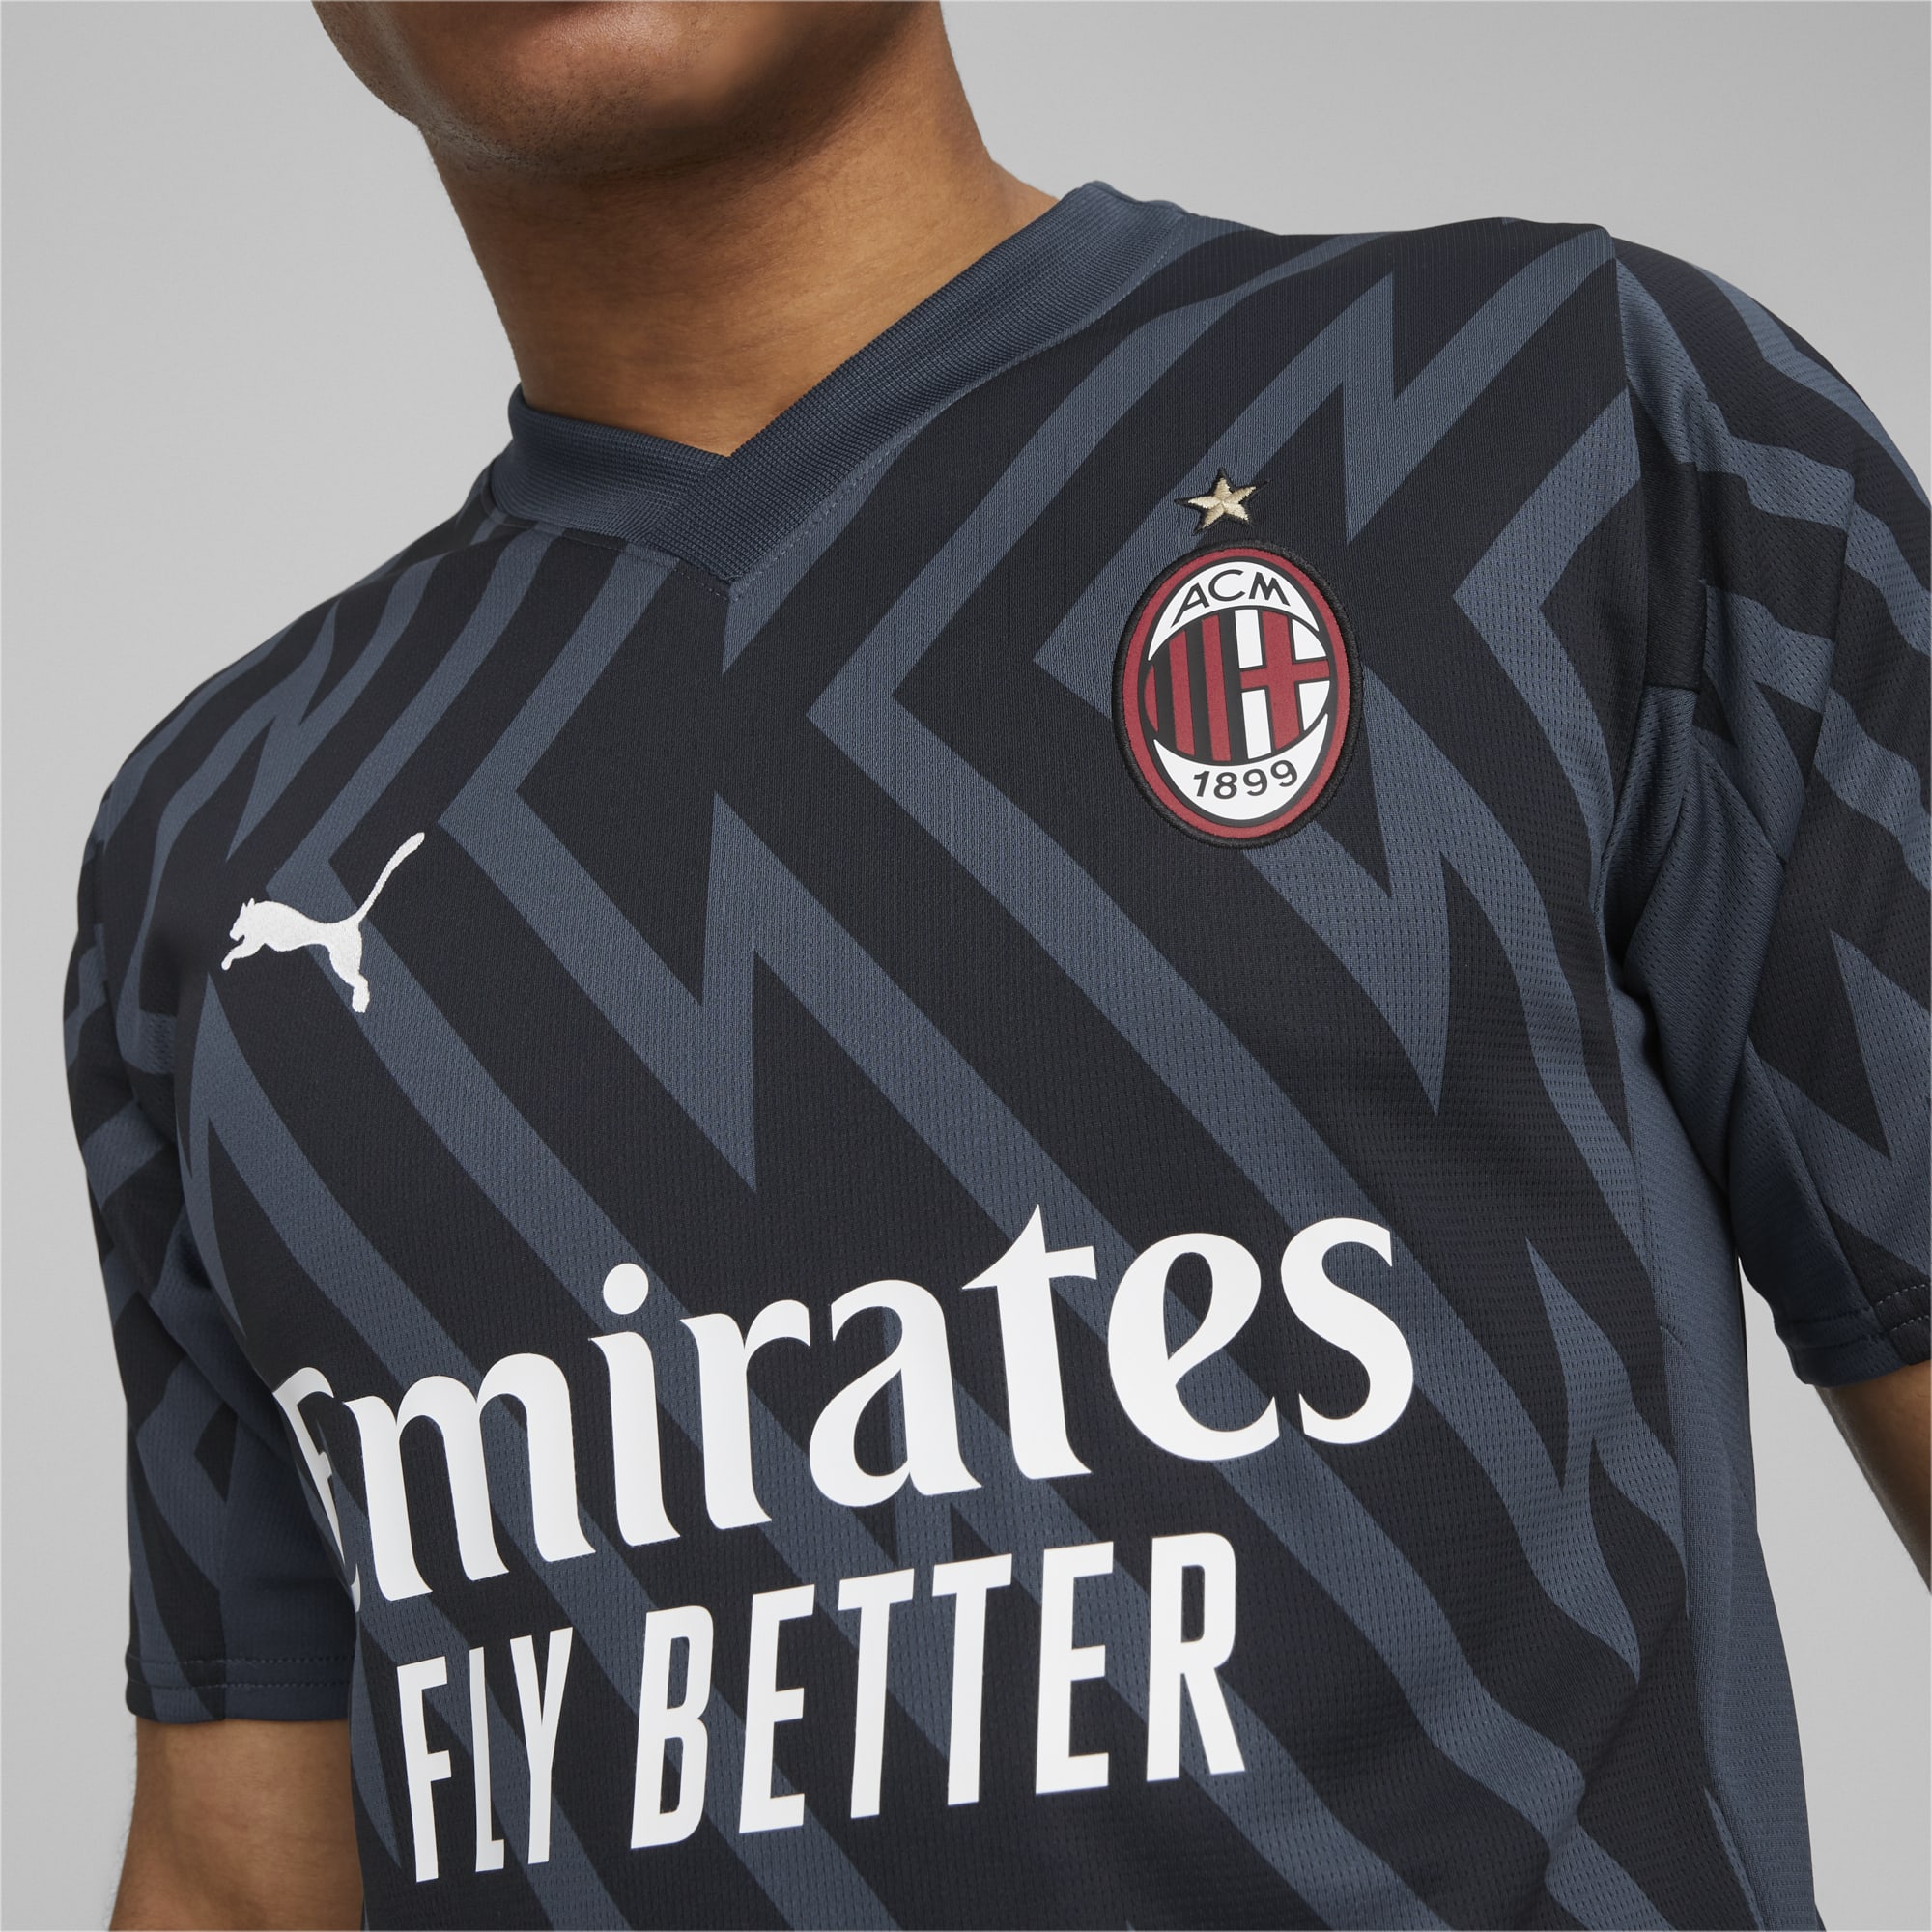 PUMA AC Milan Football Men's Goalkeeper Jersey, Dark Night, Size XS, Clothing